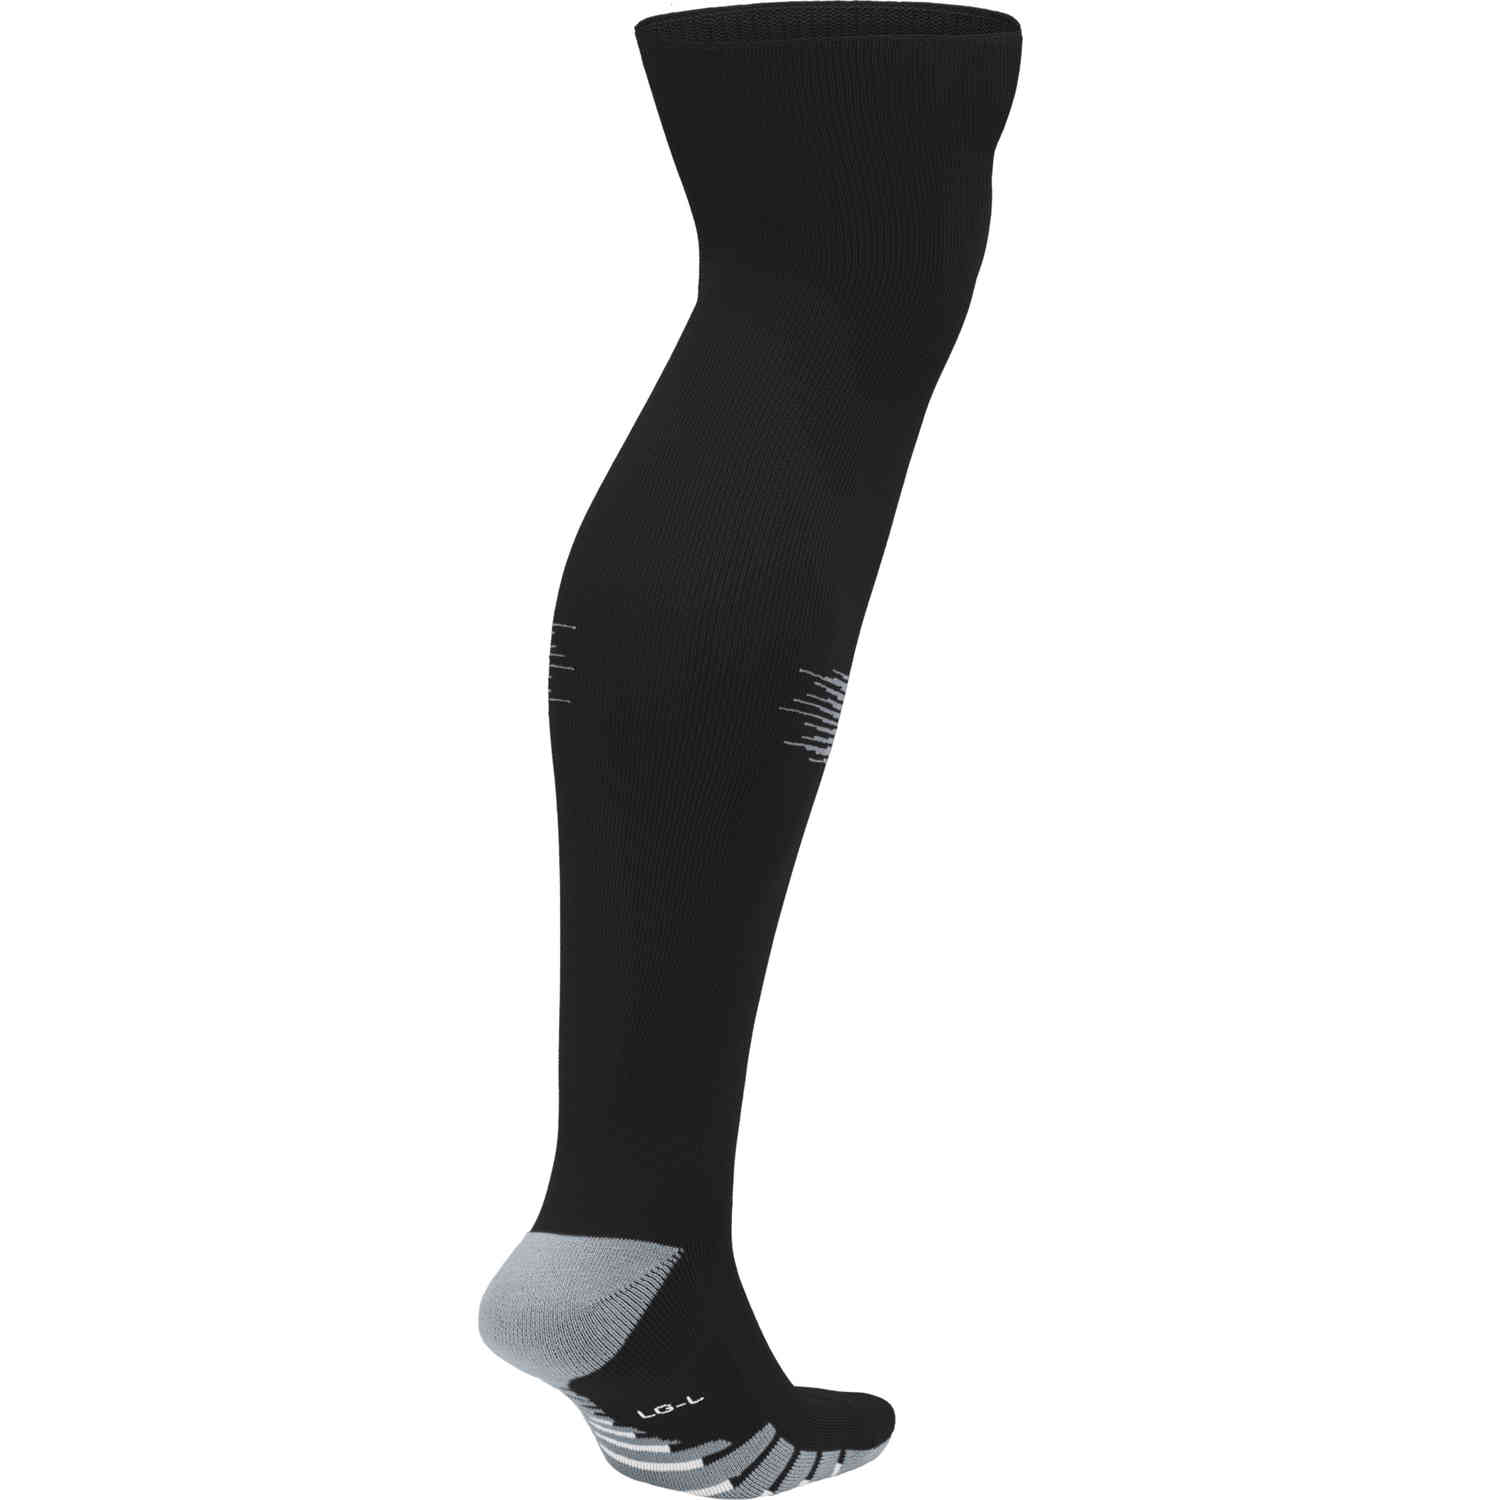 Nike Matchfit Team Soccer Socks - Black/Cool Grey - Soccer Master